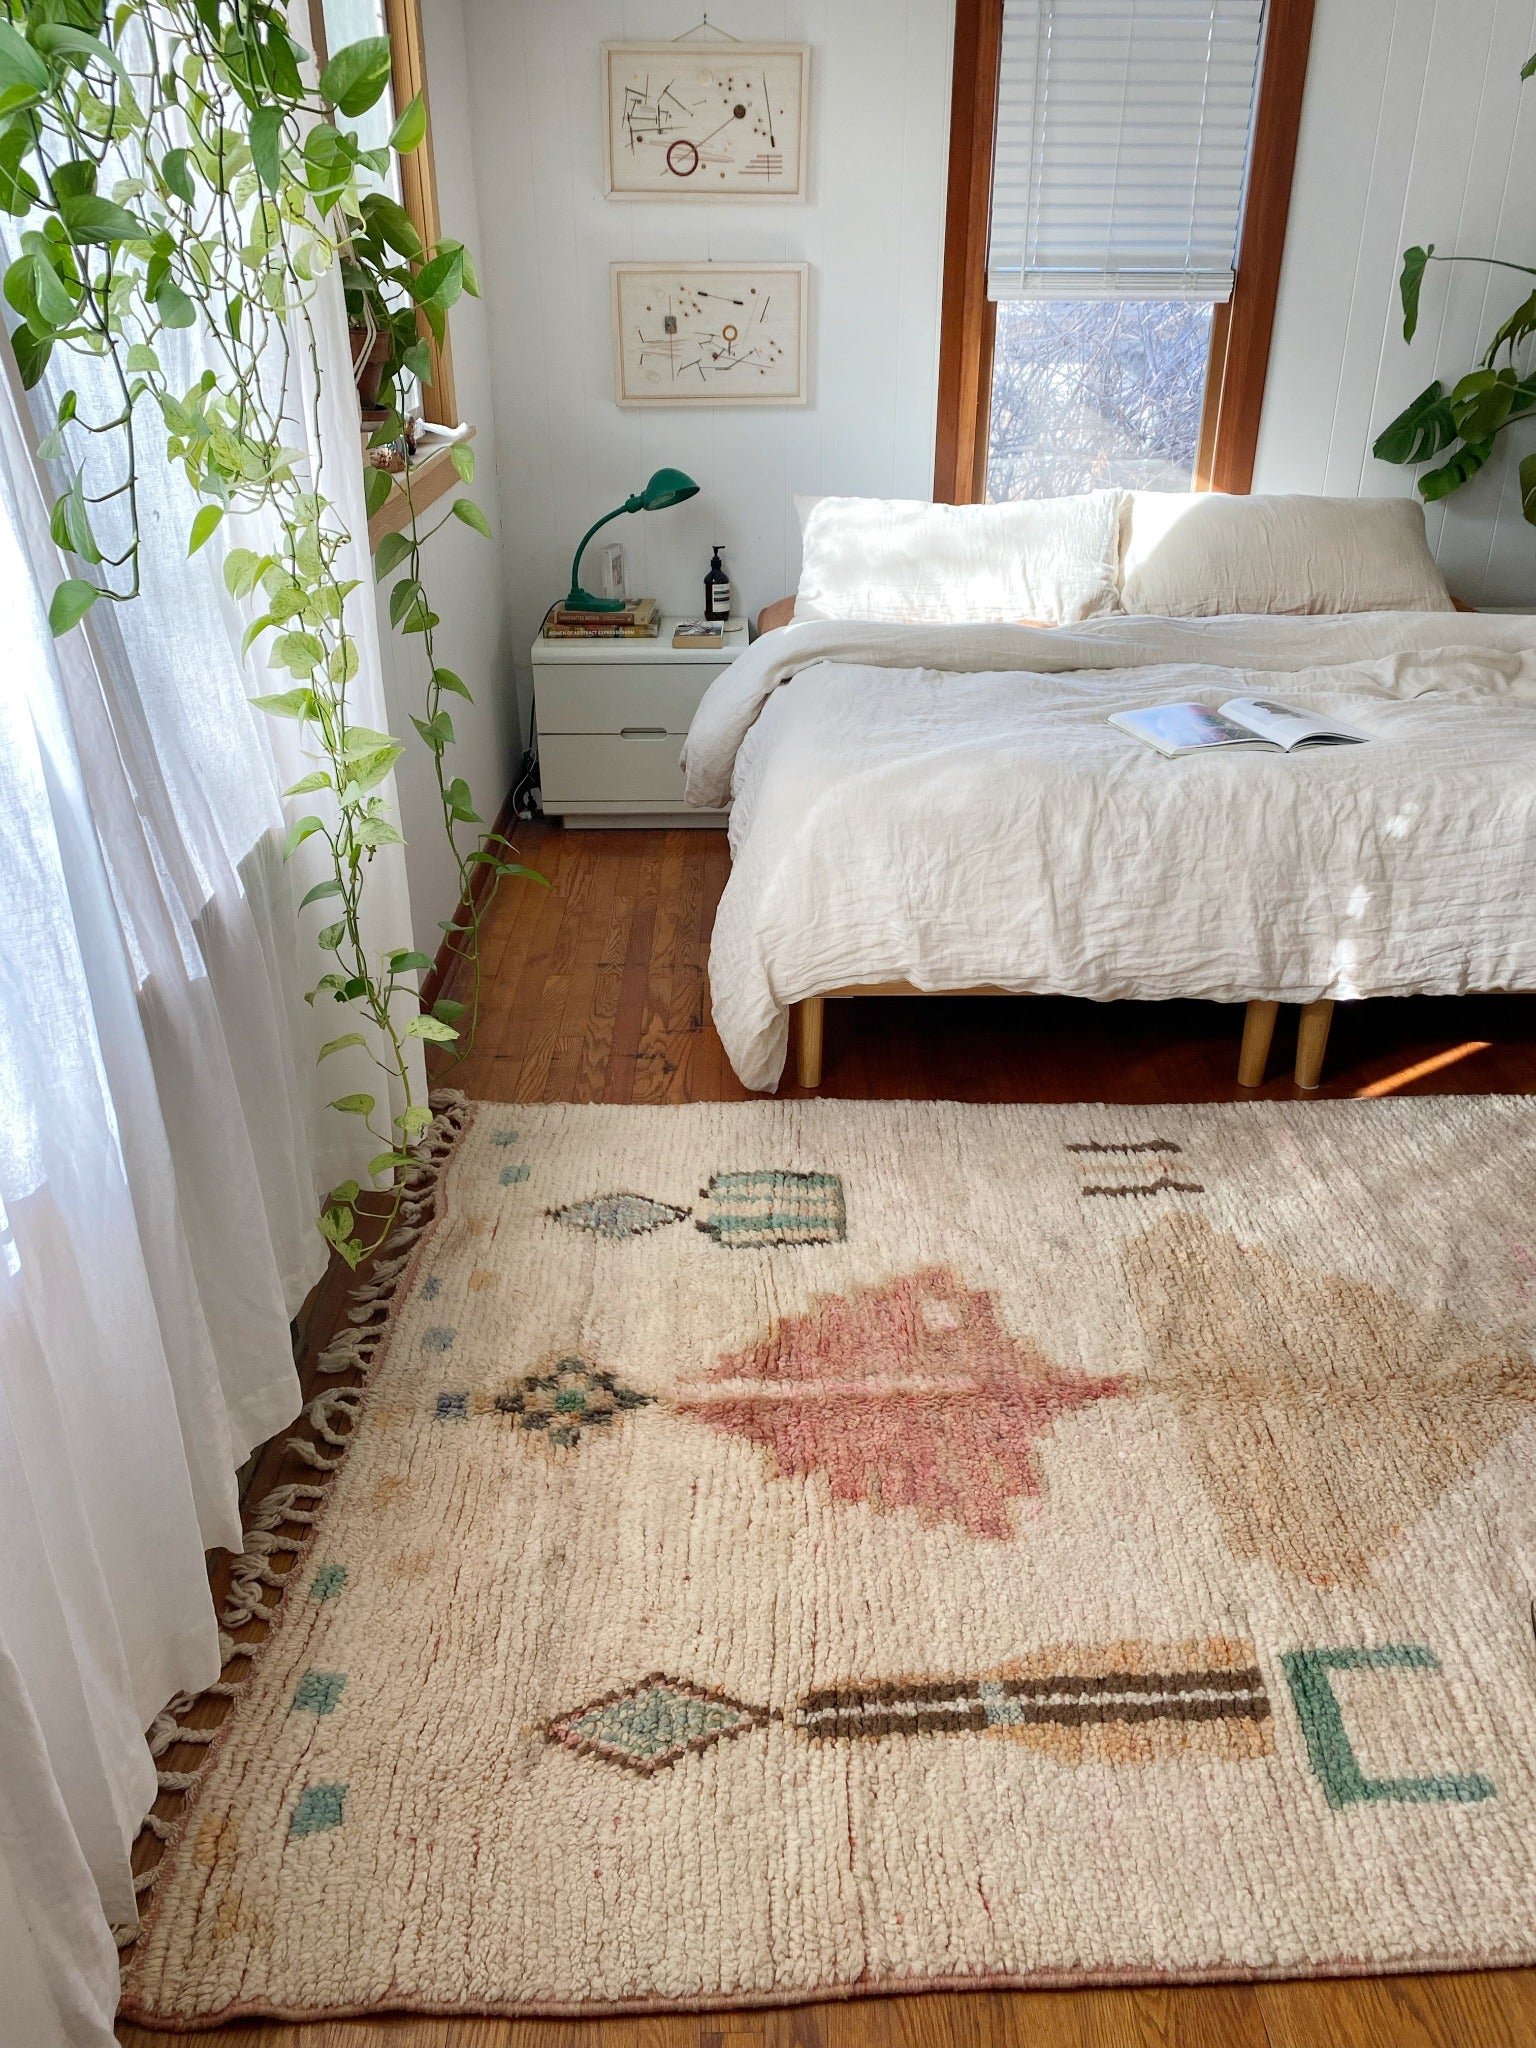 See Details of Maya Moroccan Rug in a Bedroom